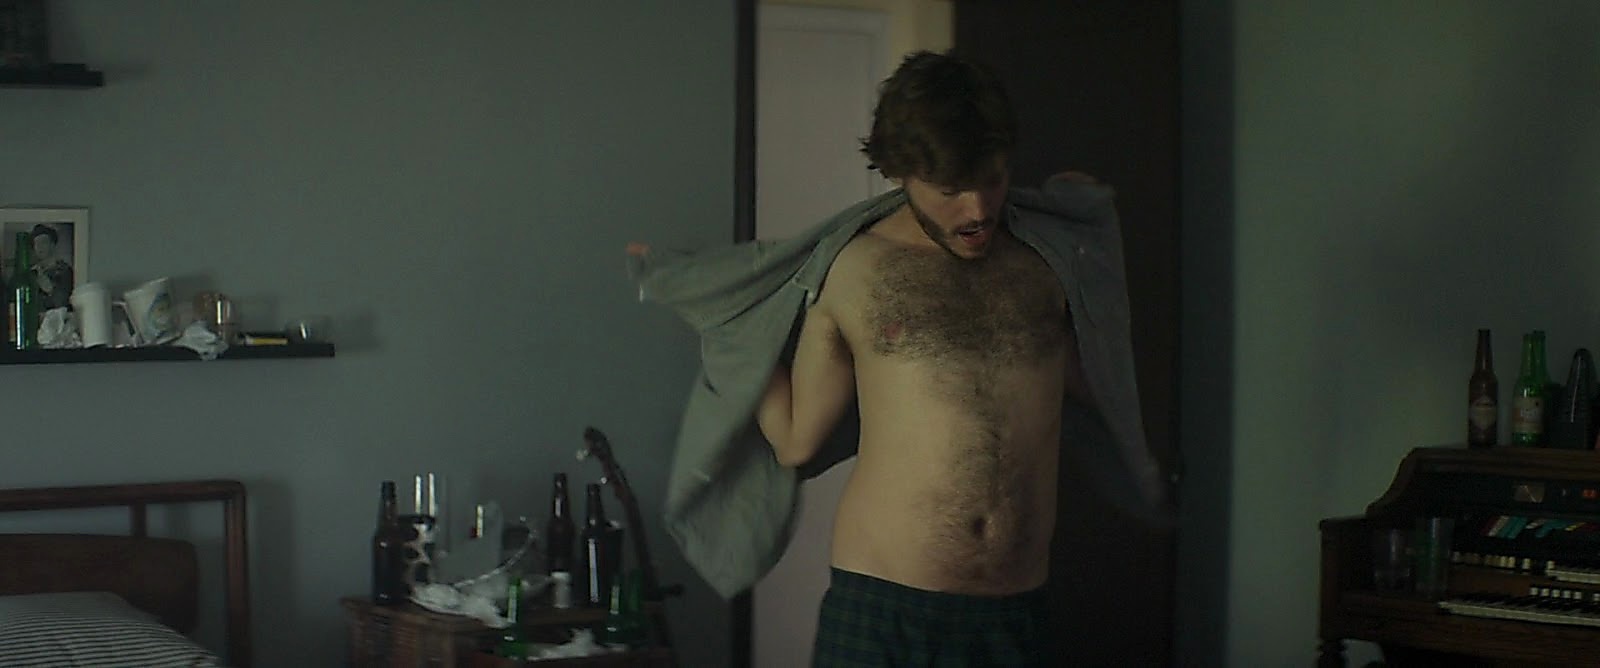 Emile Hirsch sexy shirtless scene March 25, 2017, 1pm